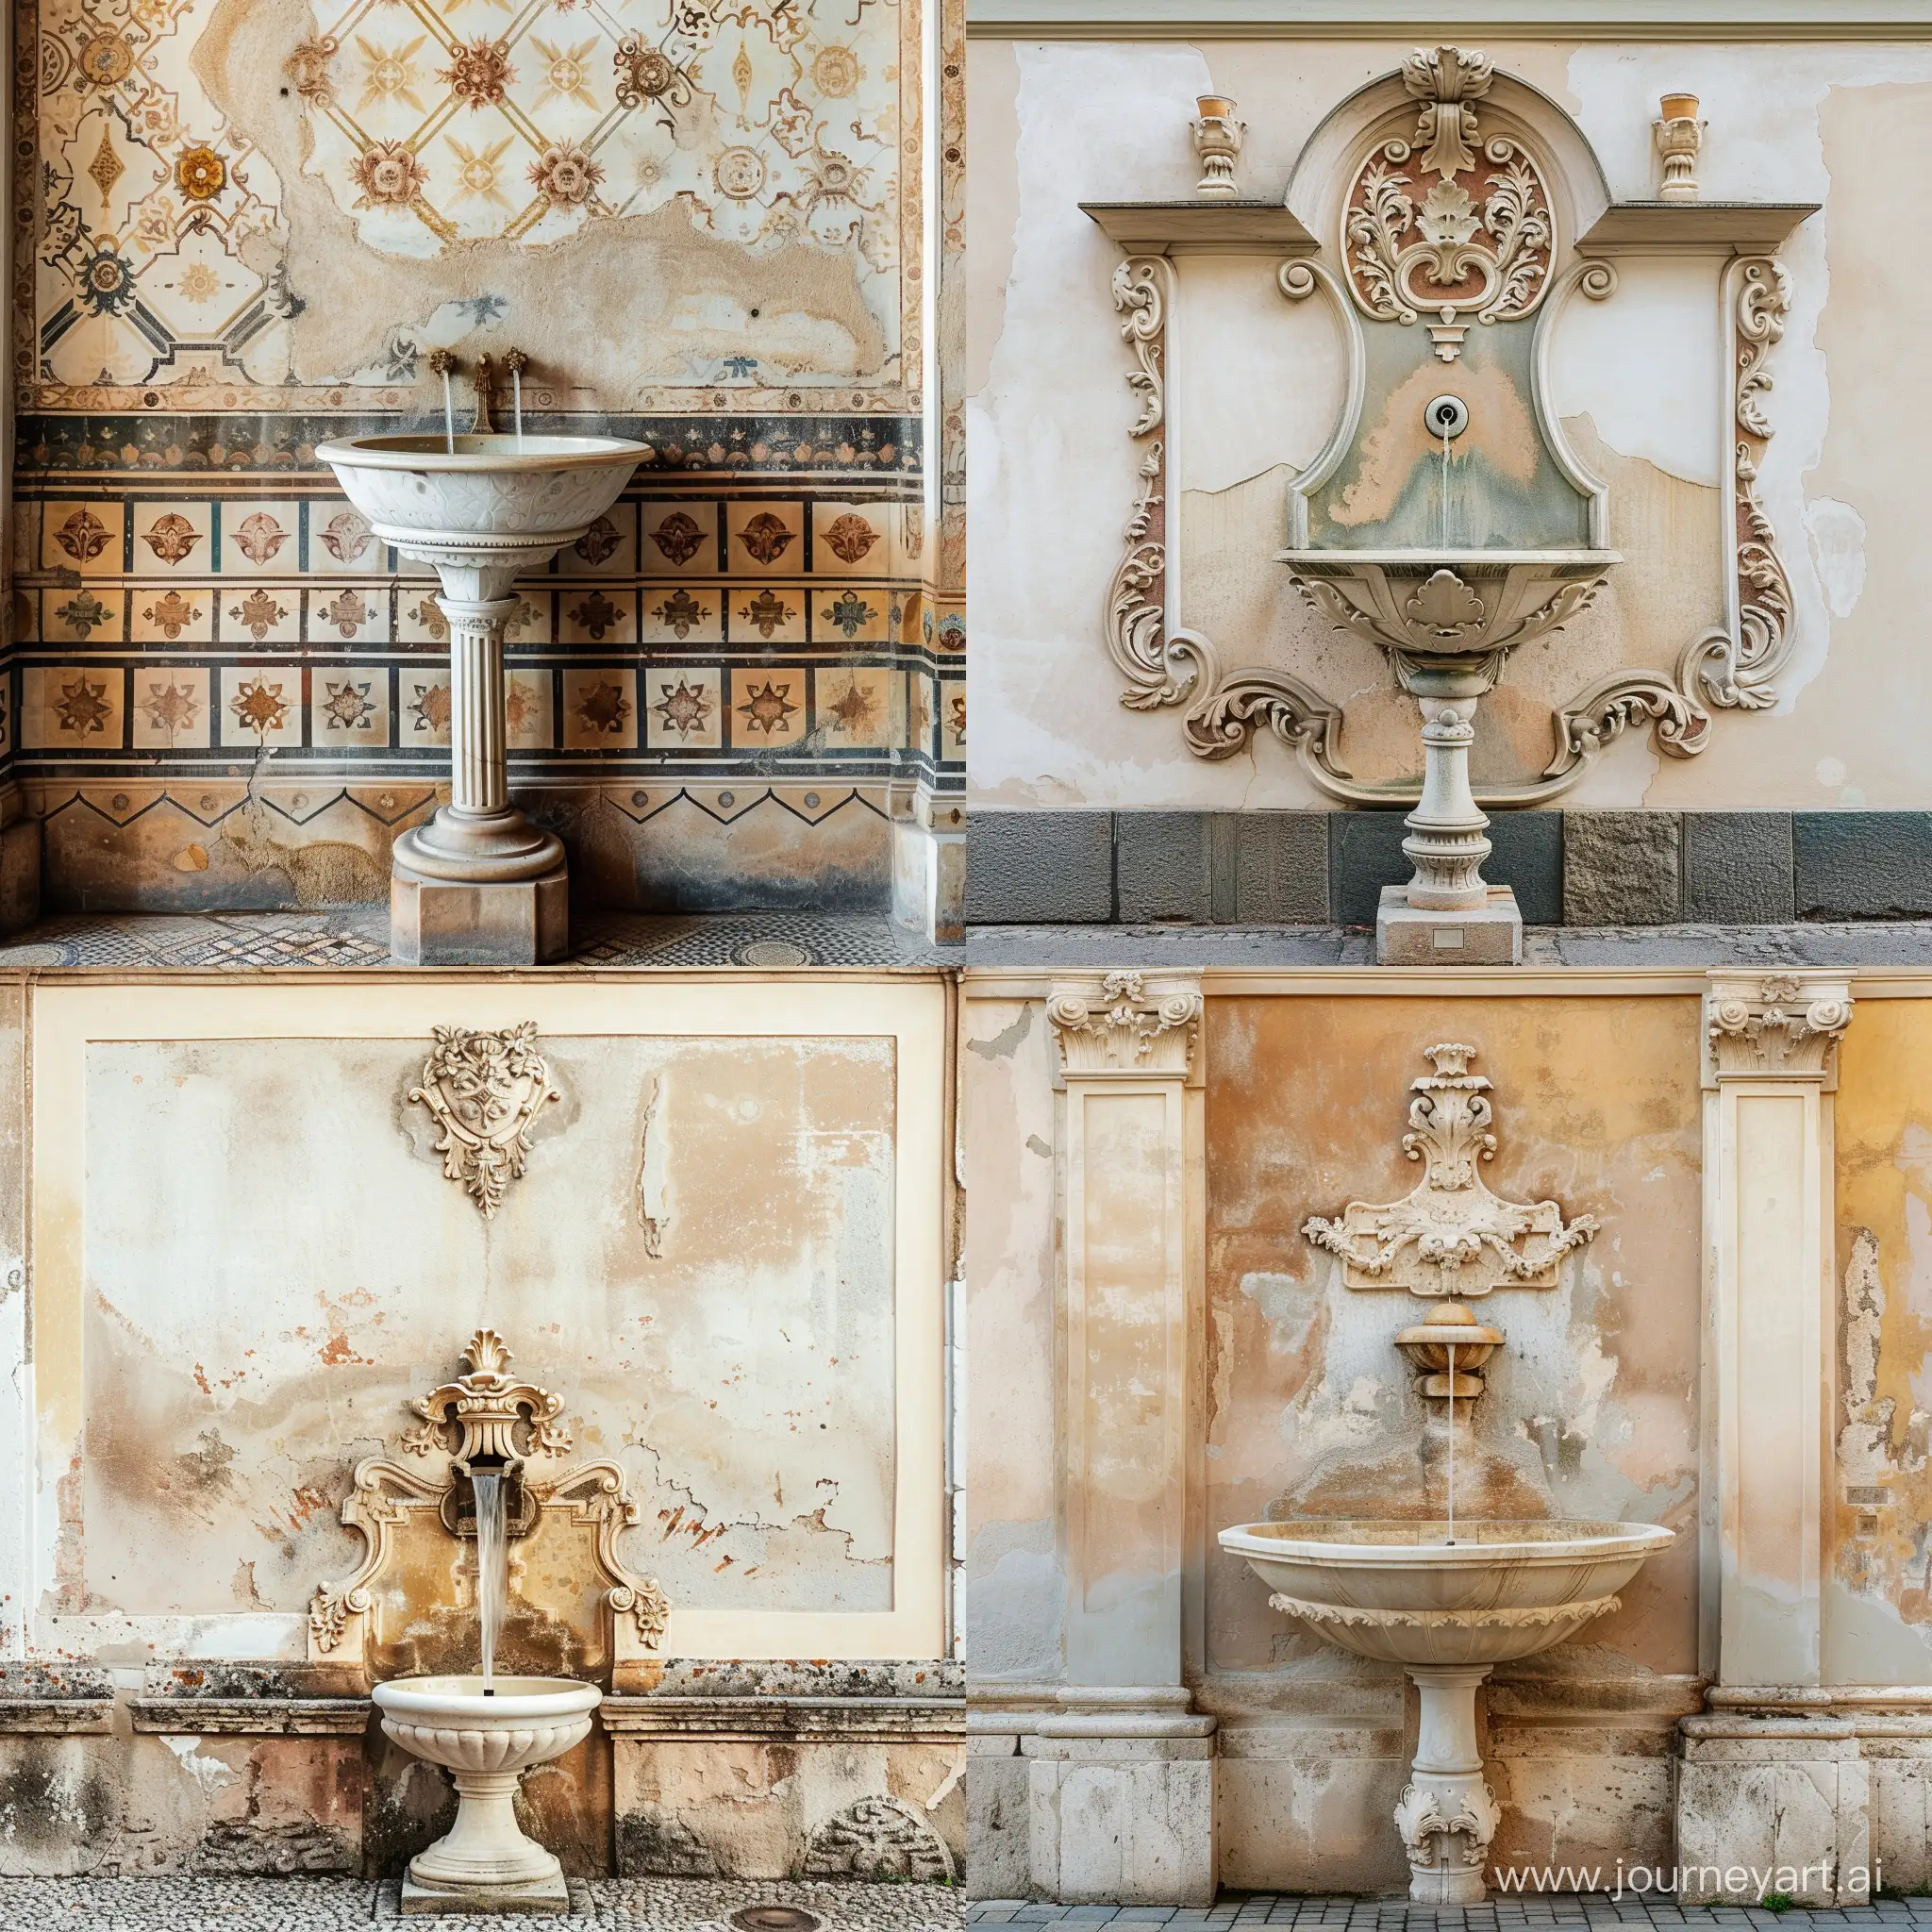 Baroque-Architecture-Ornate-Fountain-with-Pedestal-Basin